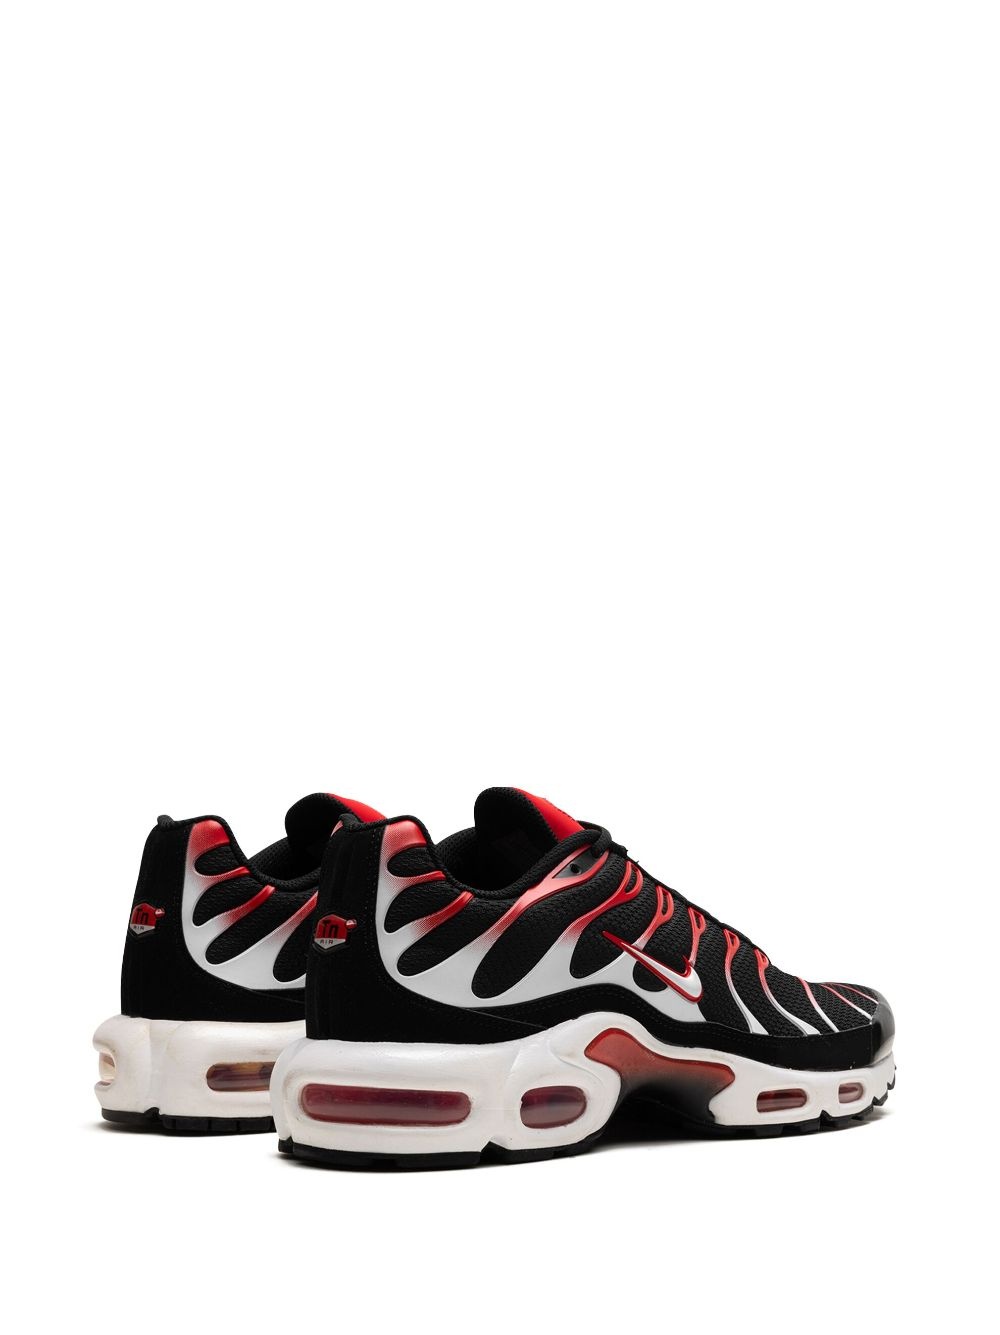 Air Max Plus "Black/White/University Red" sneakers - 3